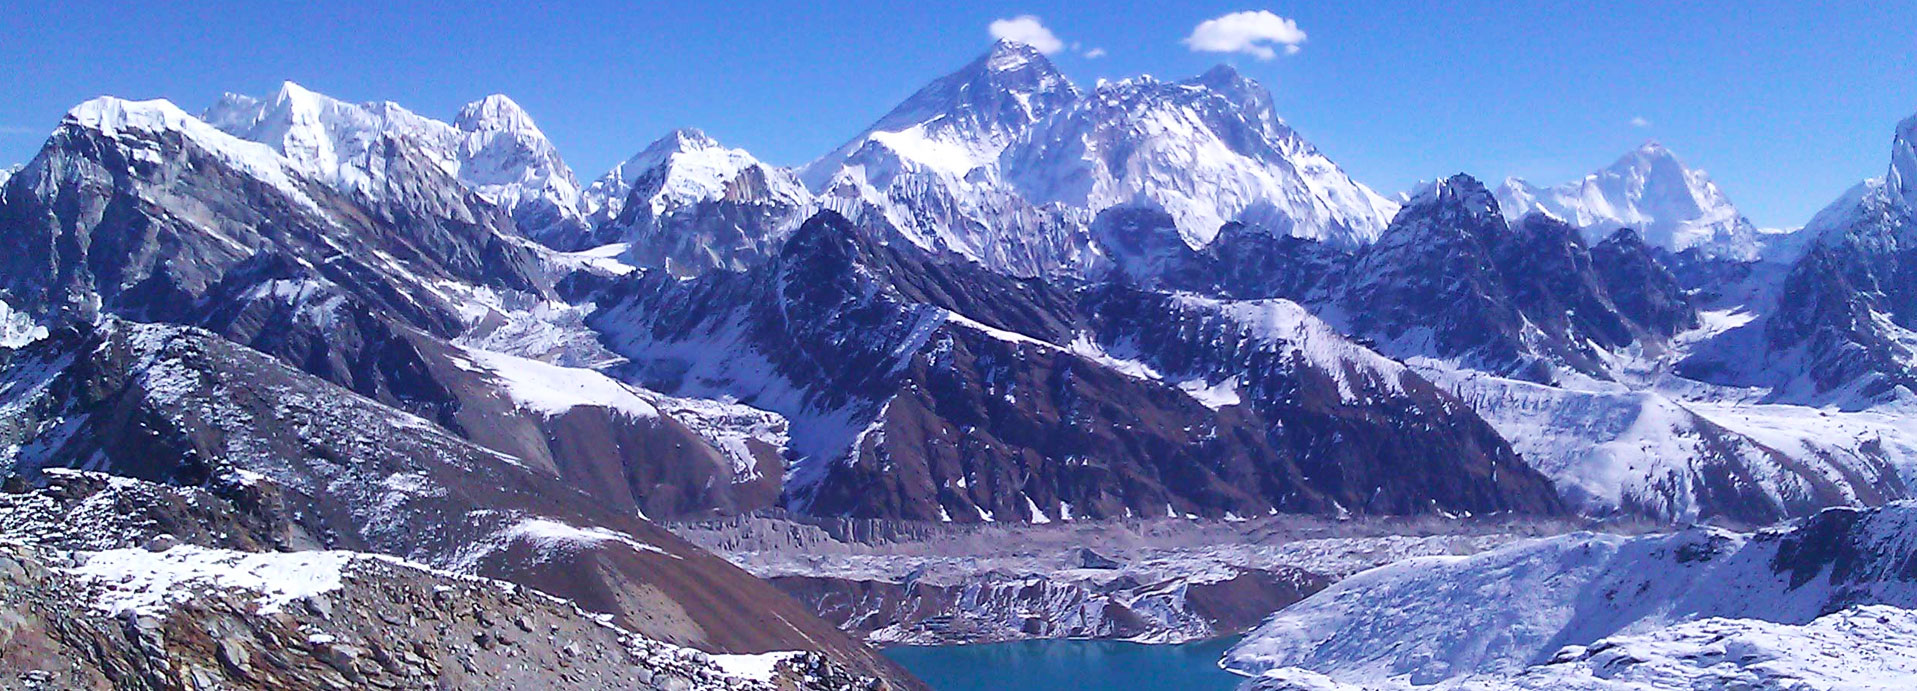 Trek to Cho-la Pass (5367m/17604ft) to Dzongla (4,850m/15908ft), 5-6 hrs walk